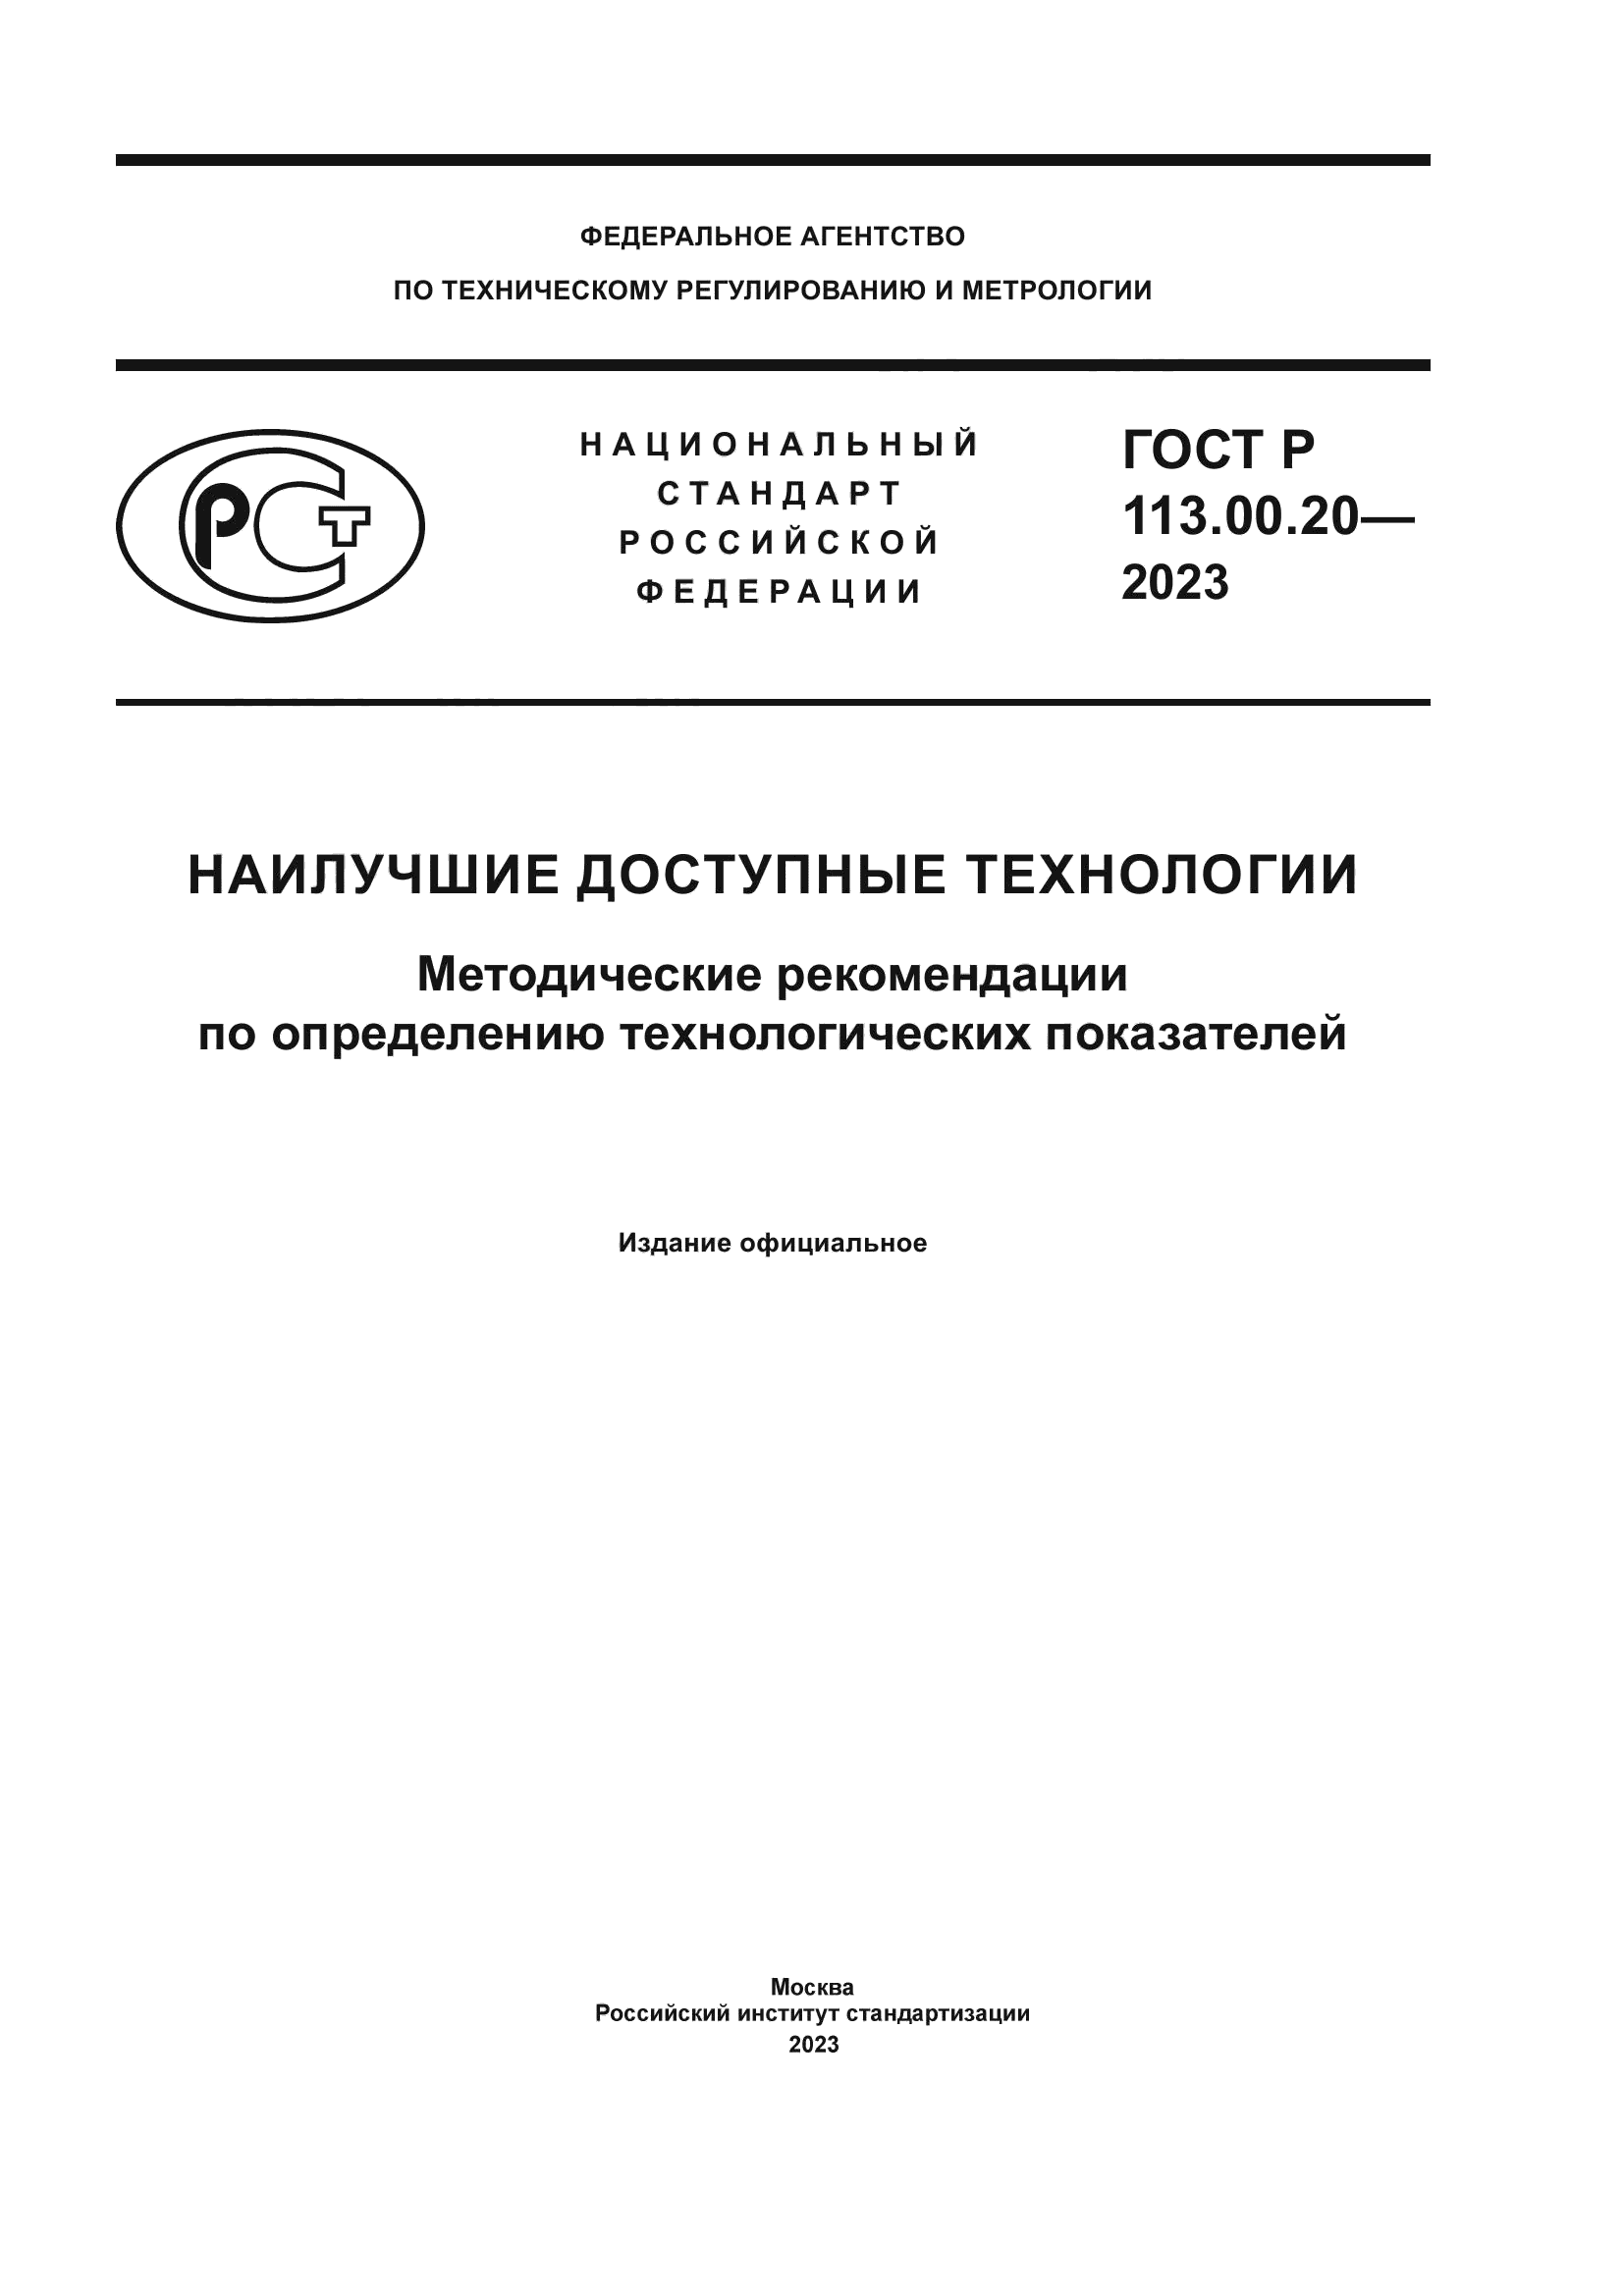 ГОСТ Р 113.00.20-2023